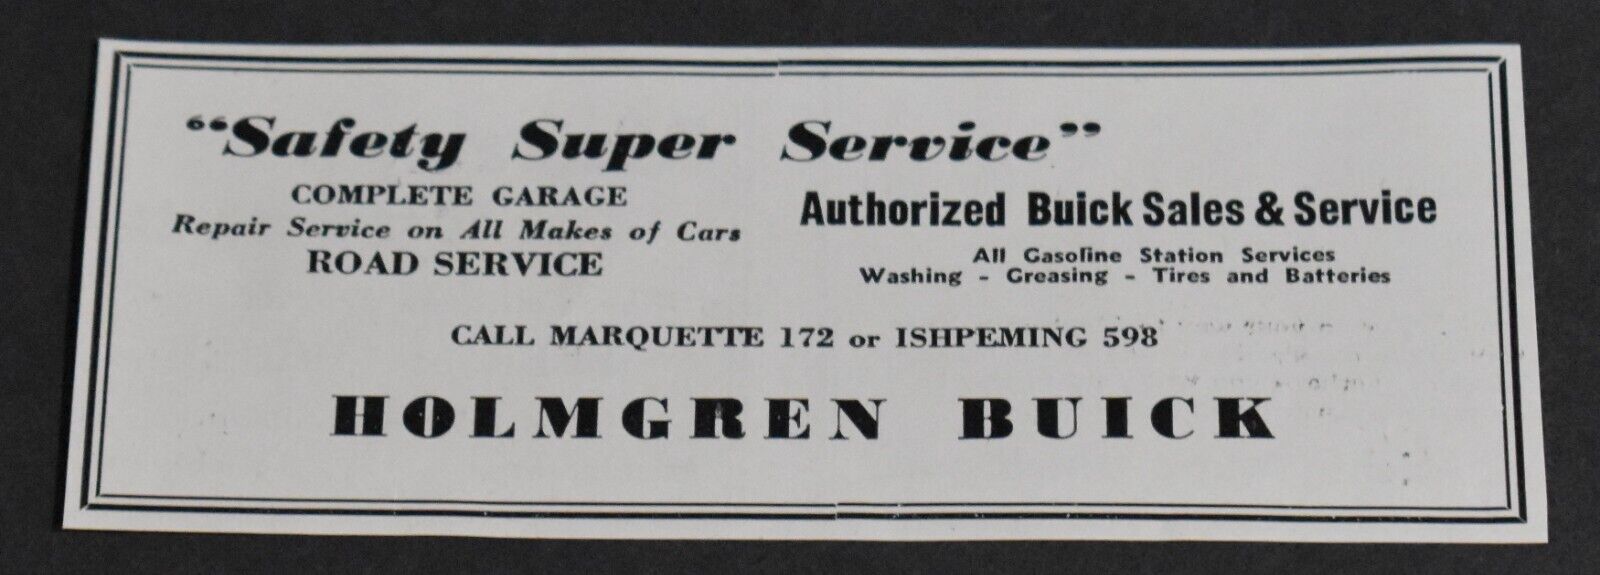 1947 Print Ad Michigan Marquette Ishpeming Holmgren Buick Complete Garage Car